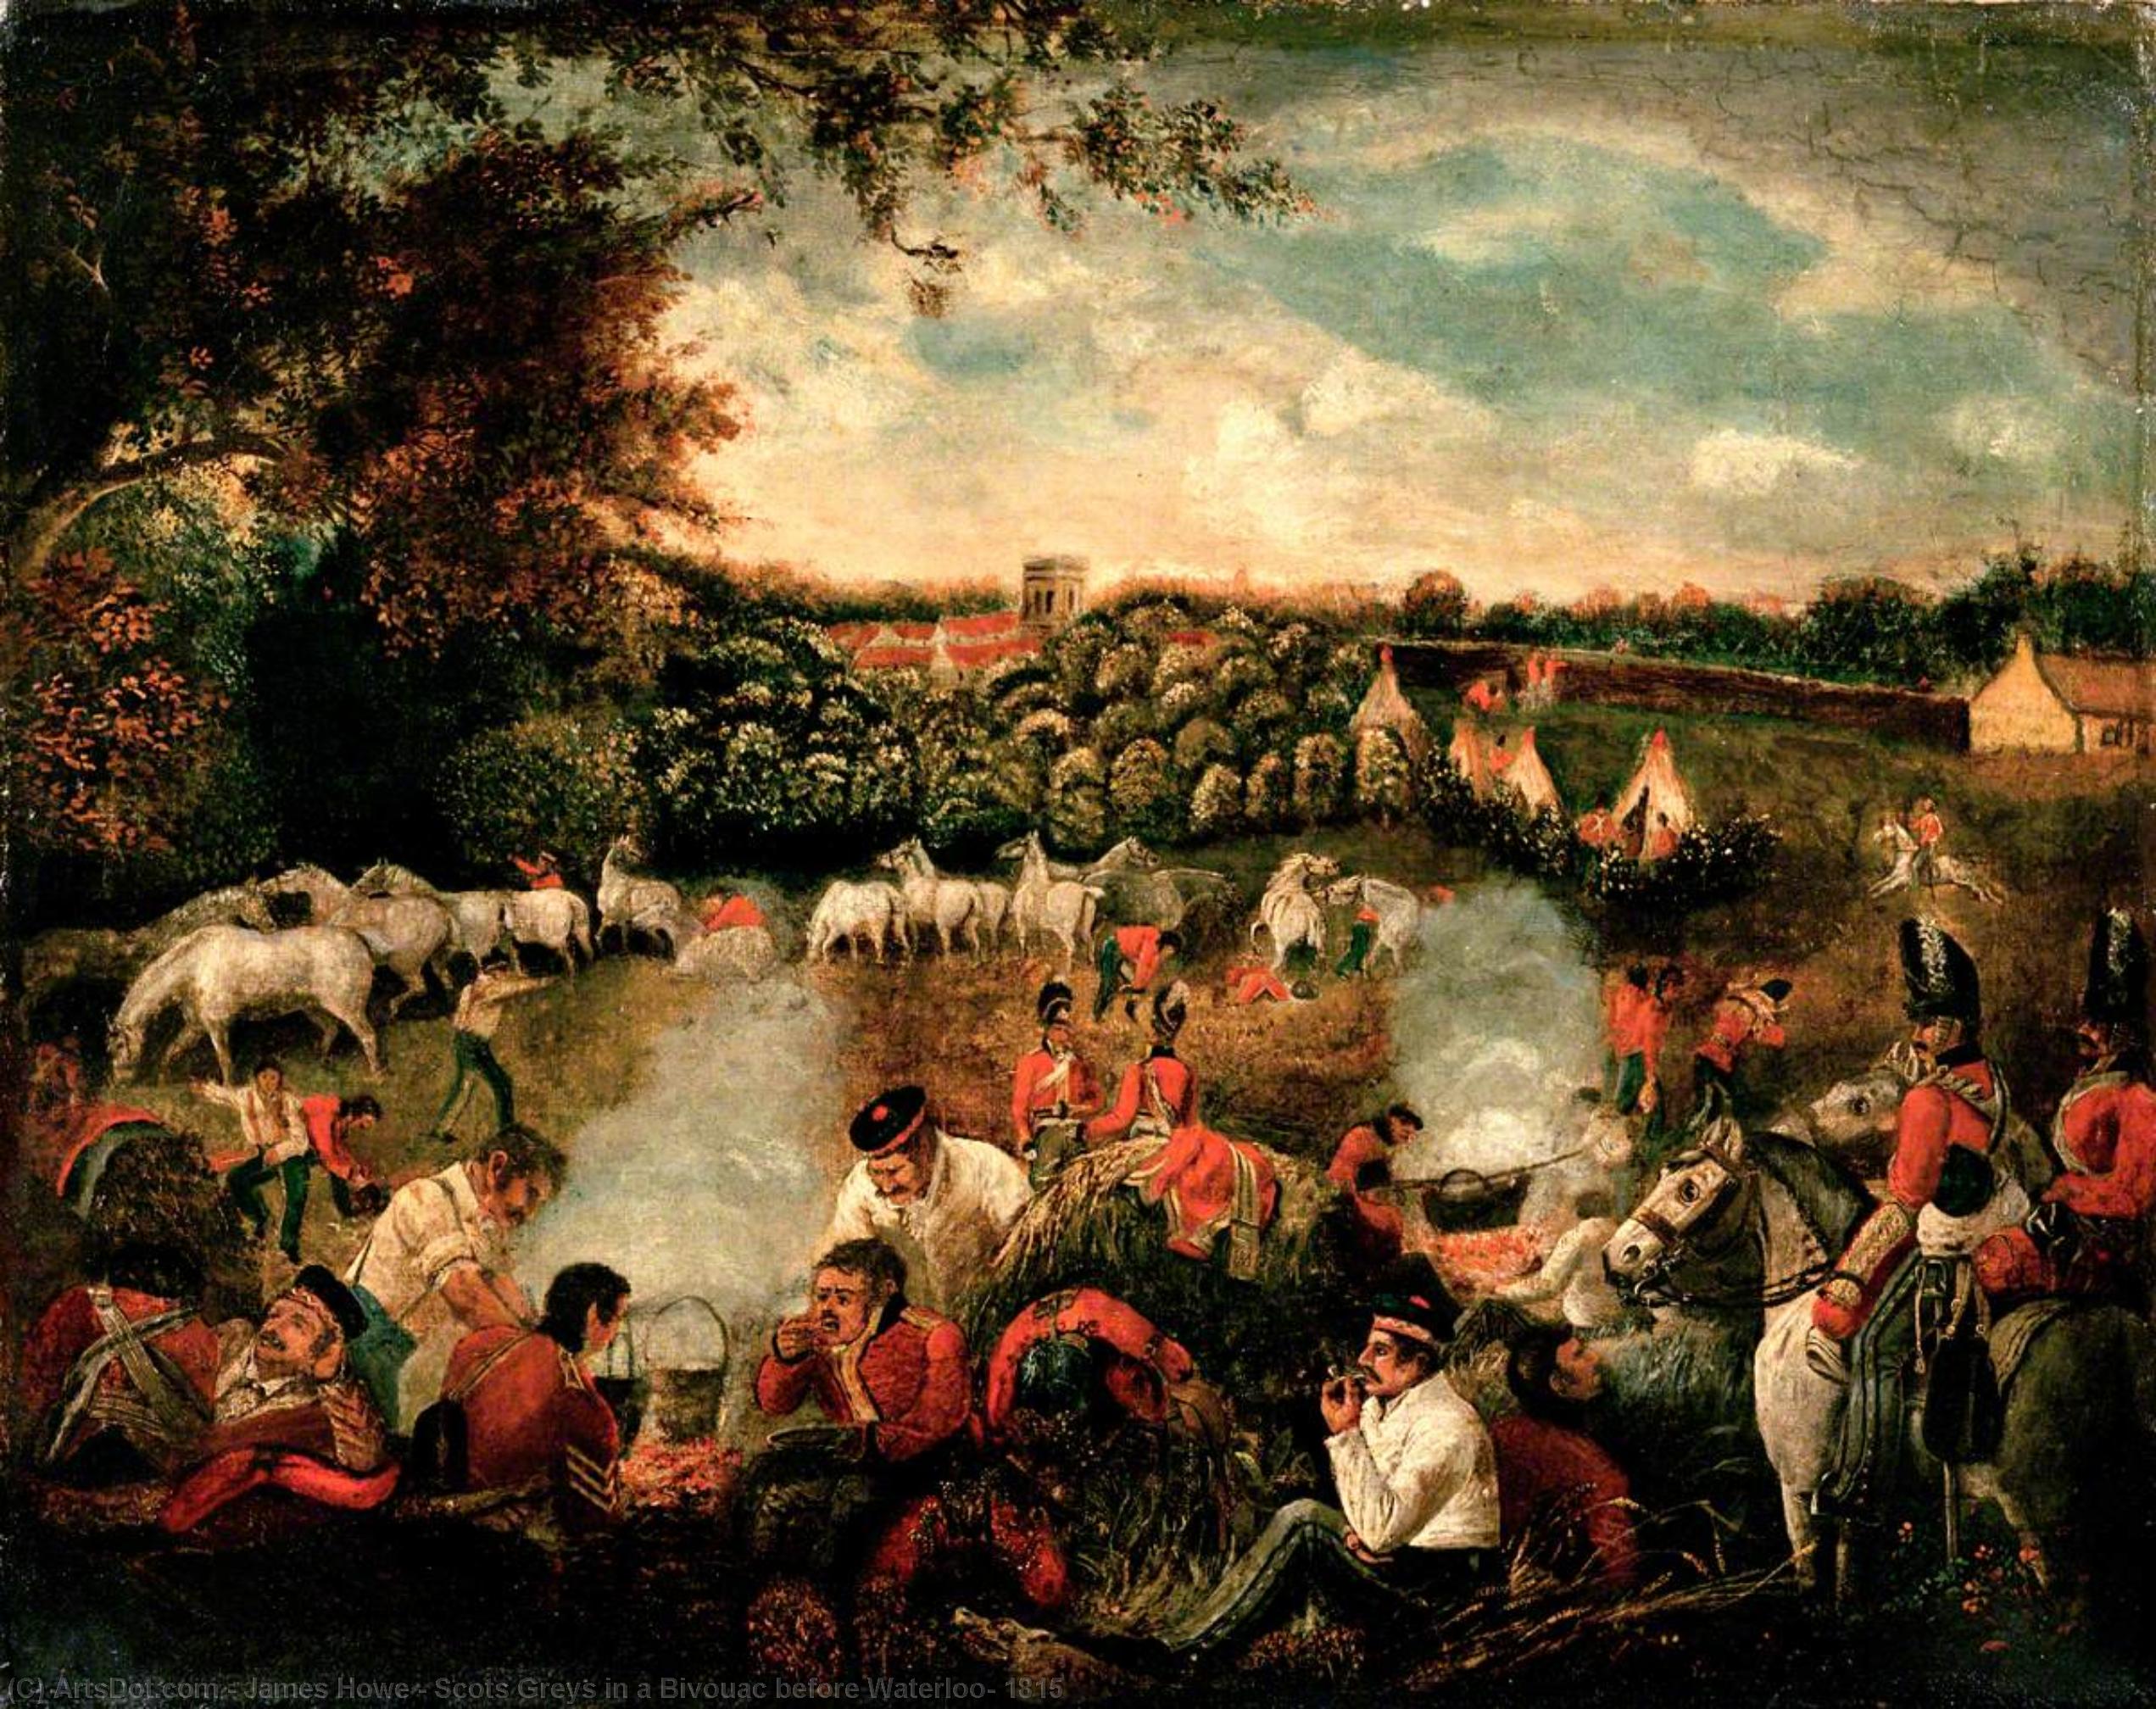 Scozzesi Greys in un Bivouac prima di Waterloo, 1815, 1815 di James Howe James Howe | ArtsDot.com